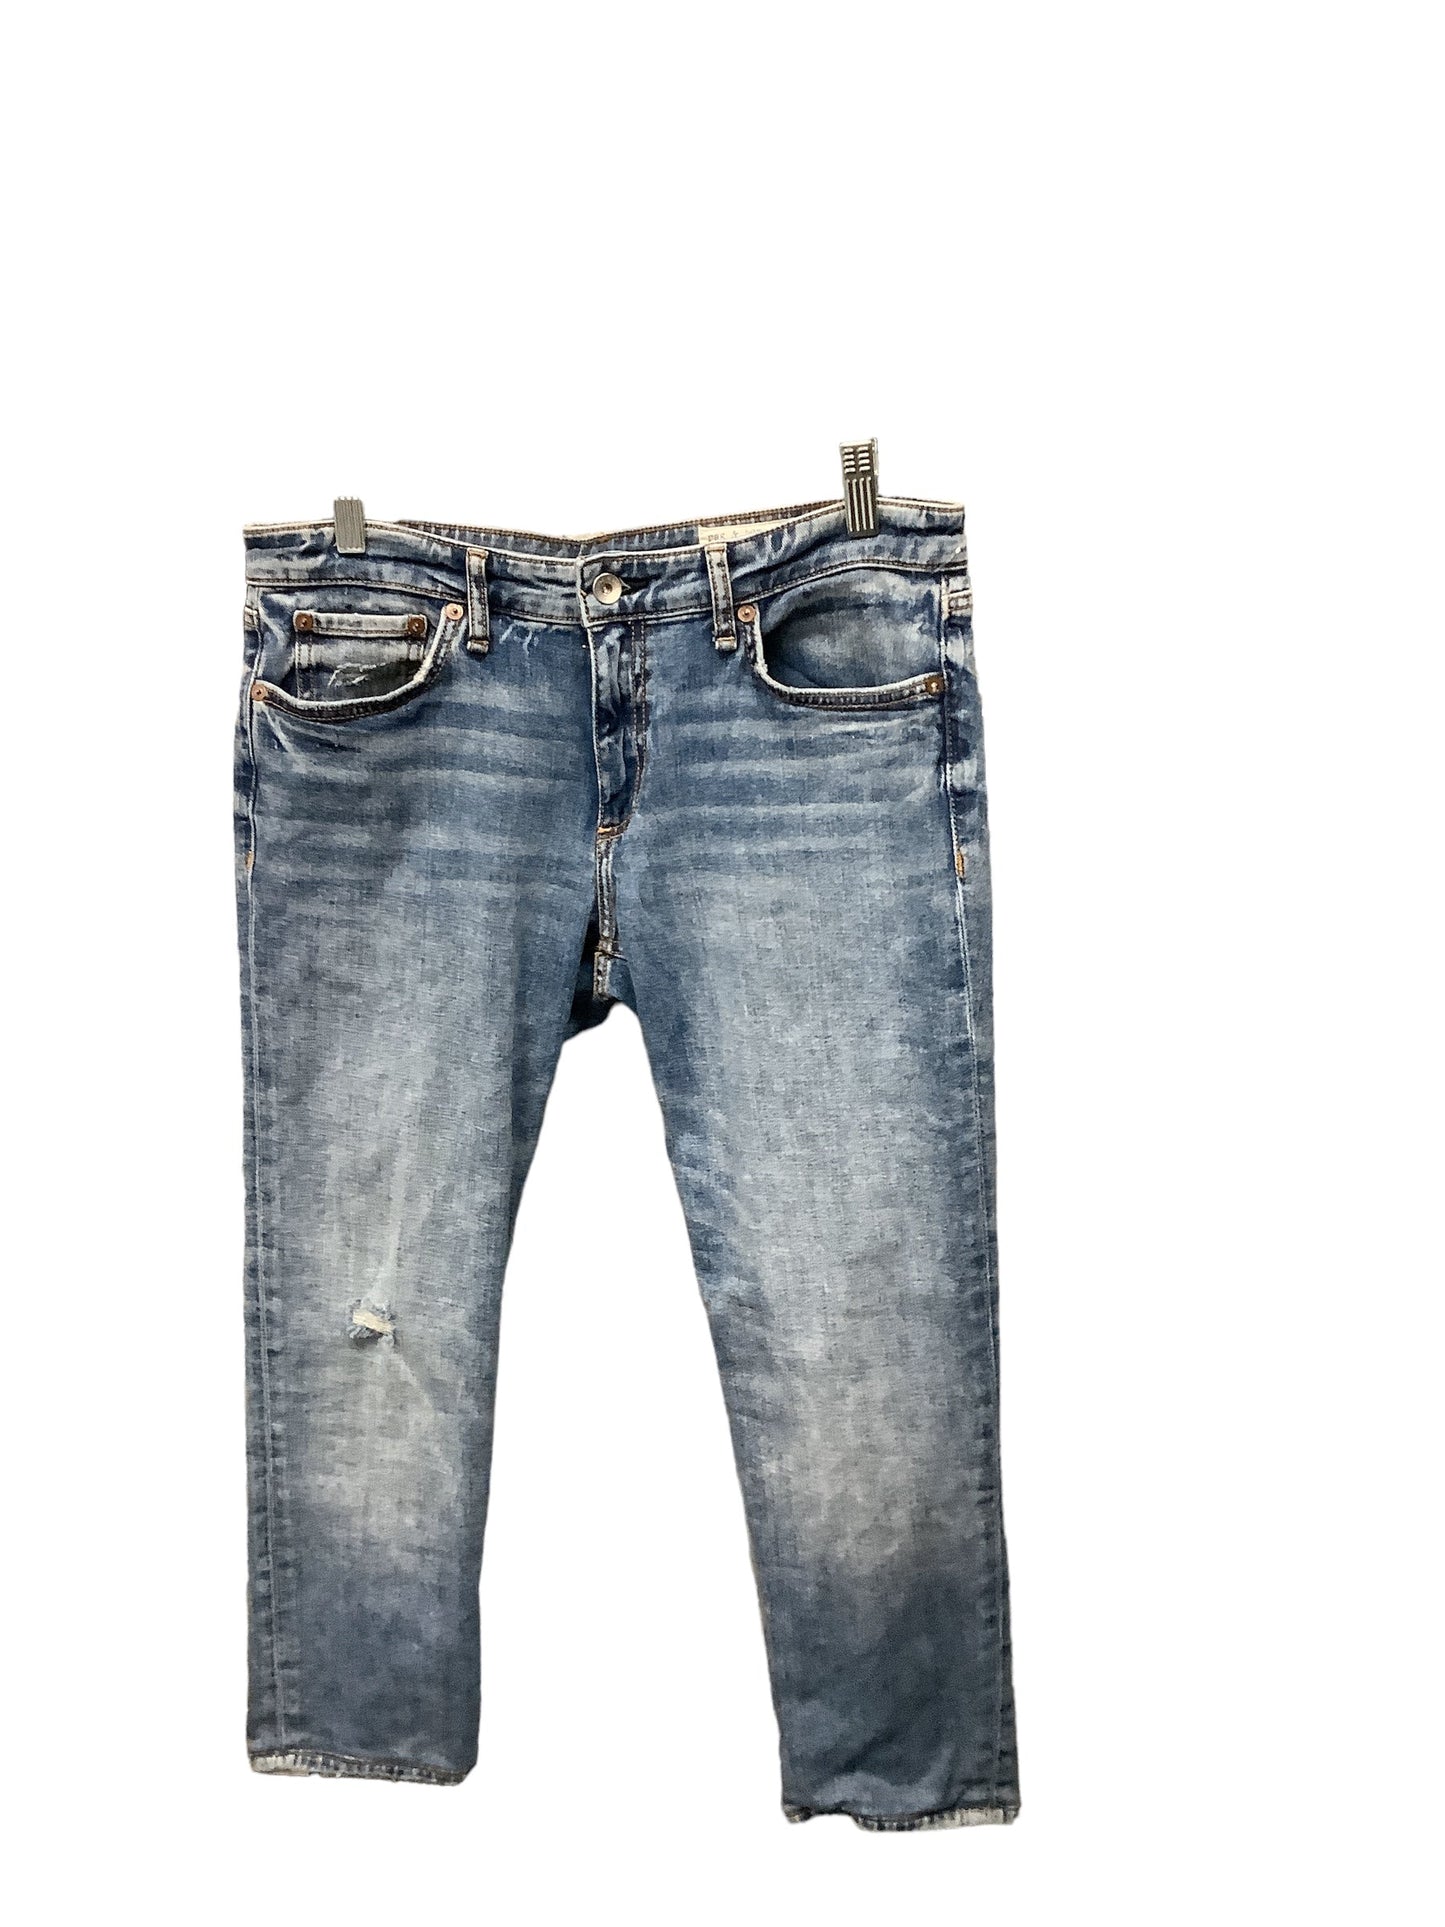 Jeans Skinny By Rag & Bones Jeans  Size: 6